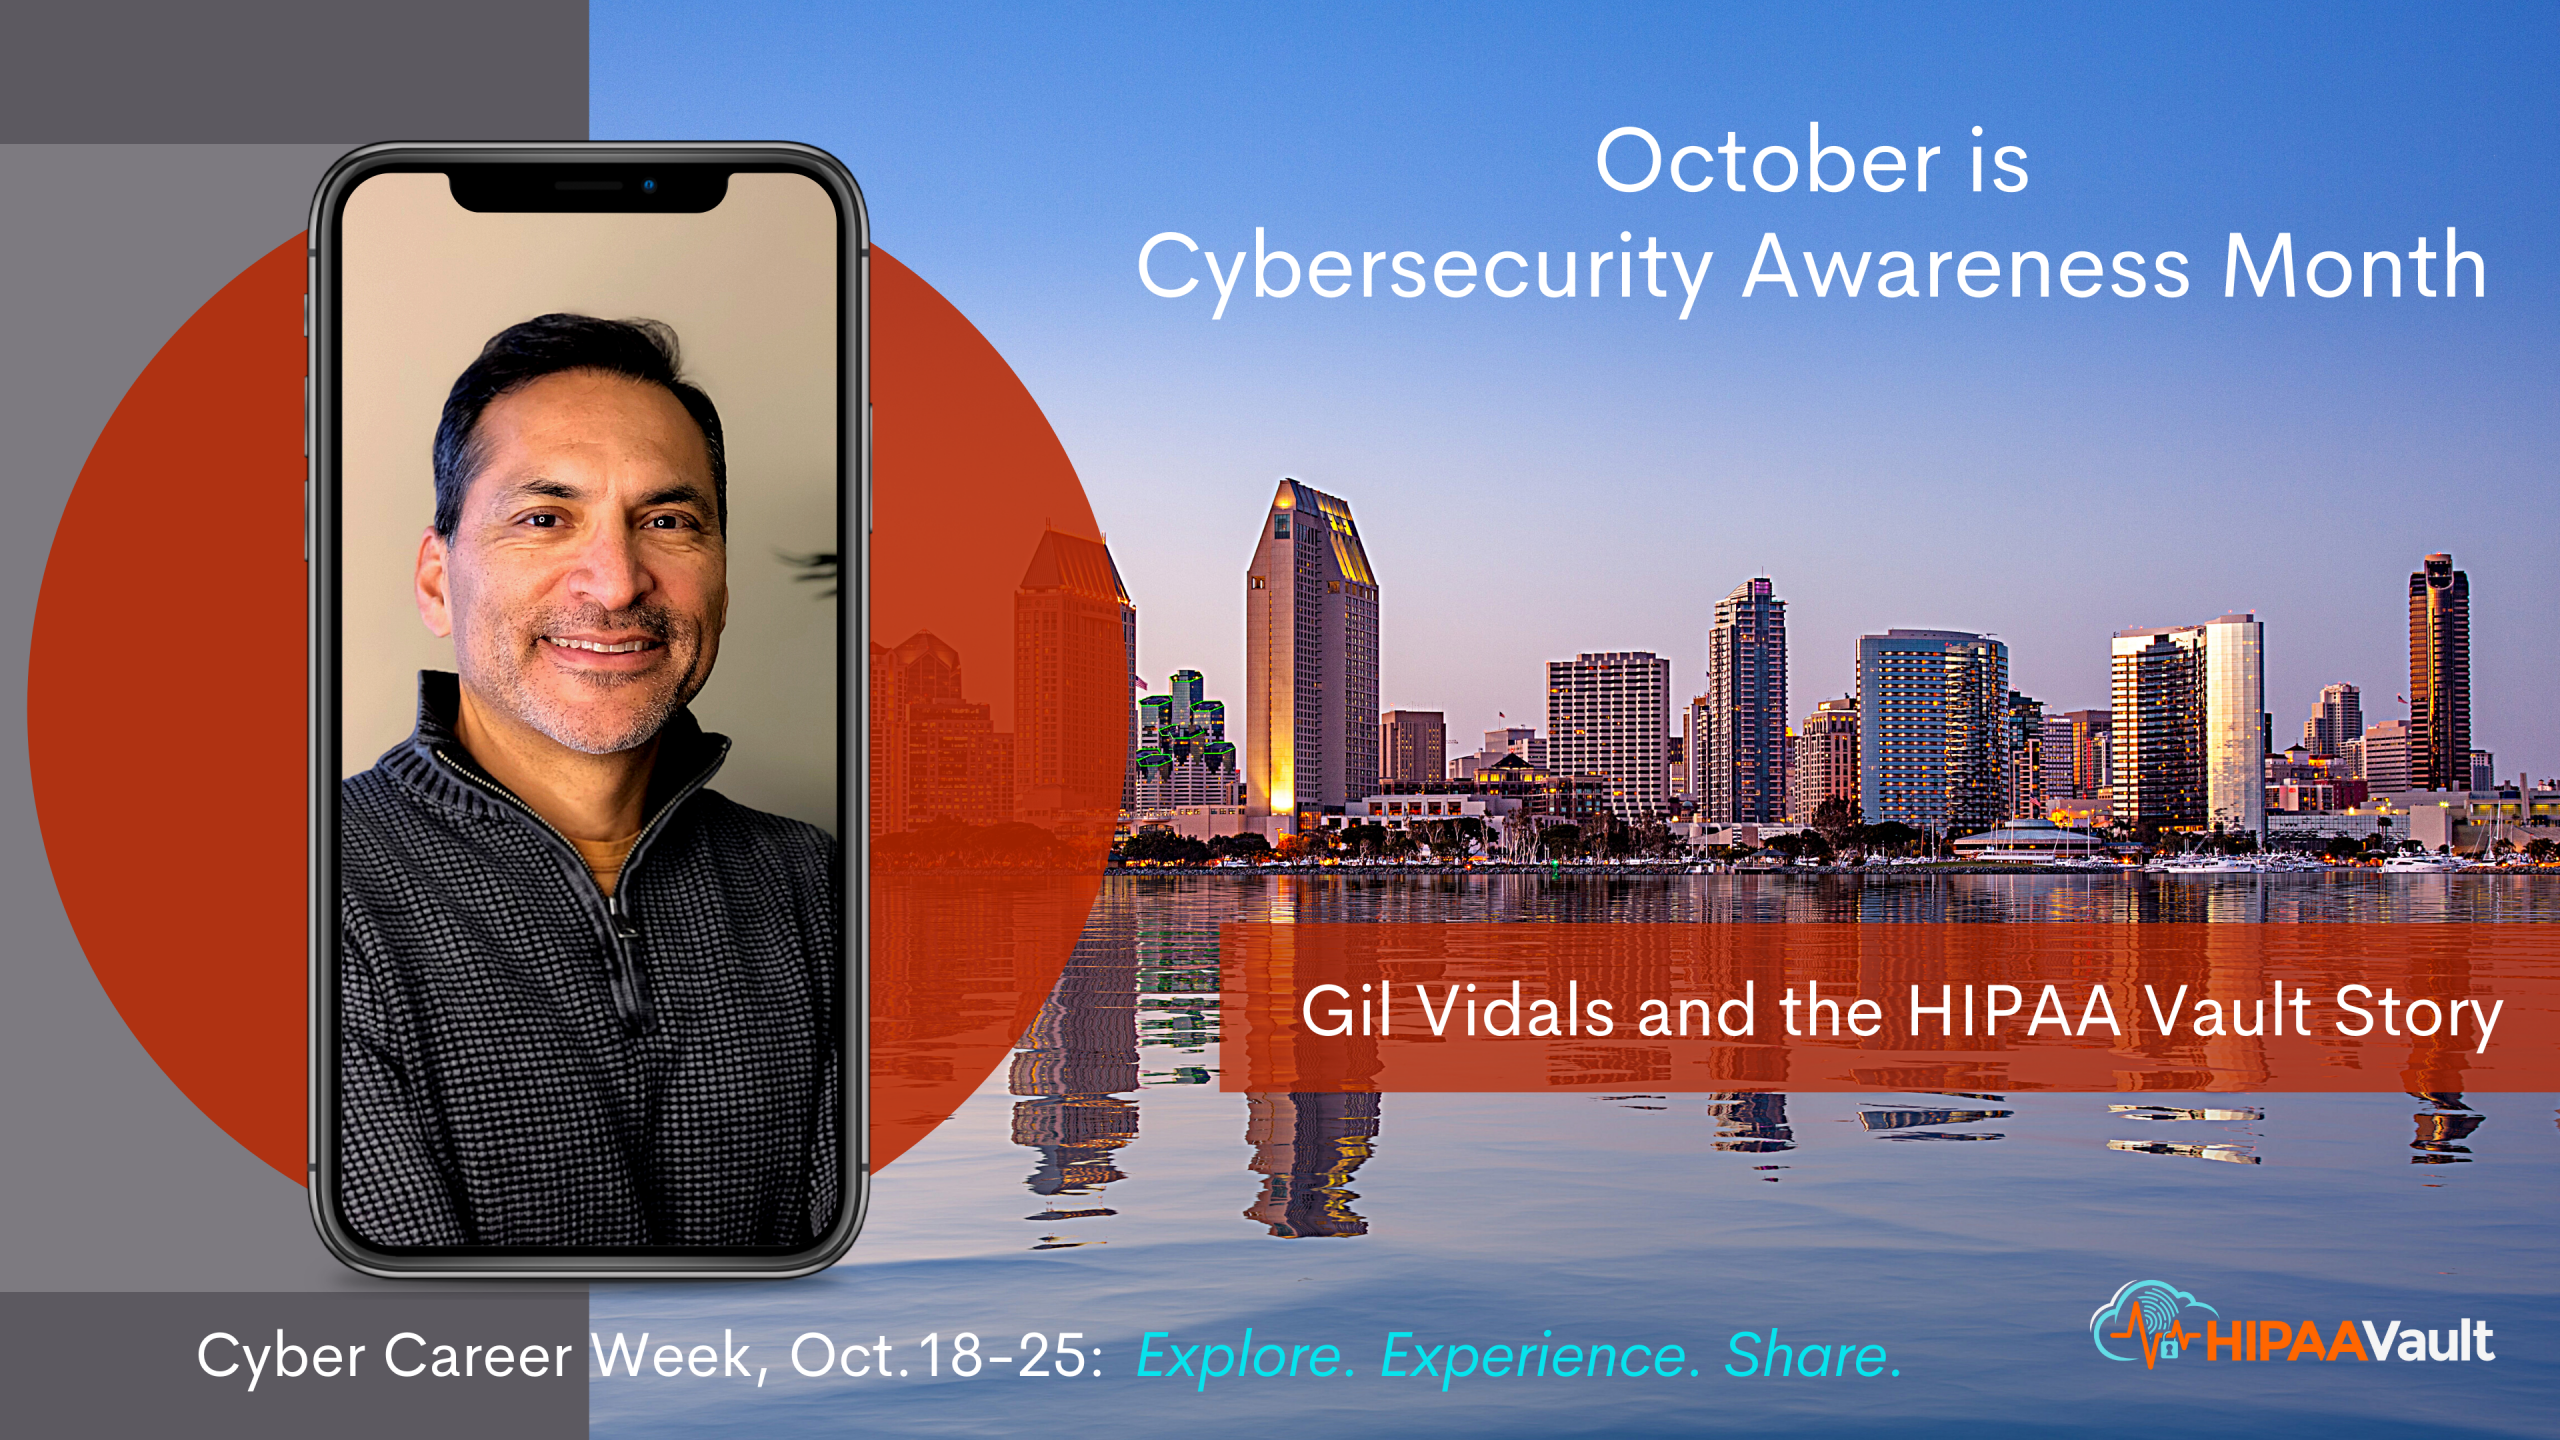 The HIPAA Vault Story – Cybersecurity Career Awareness Week